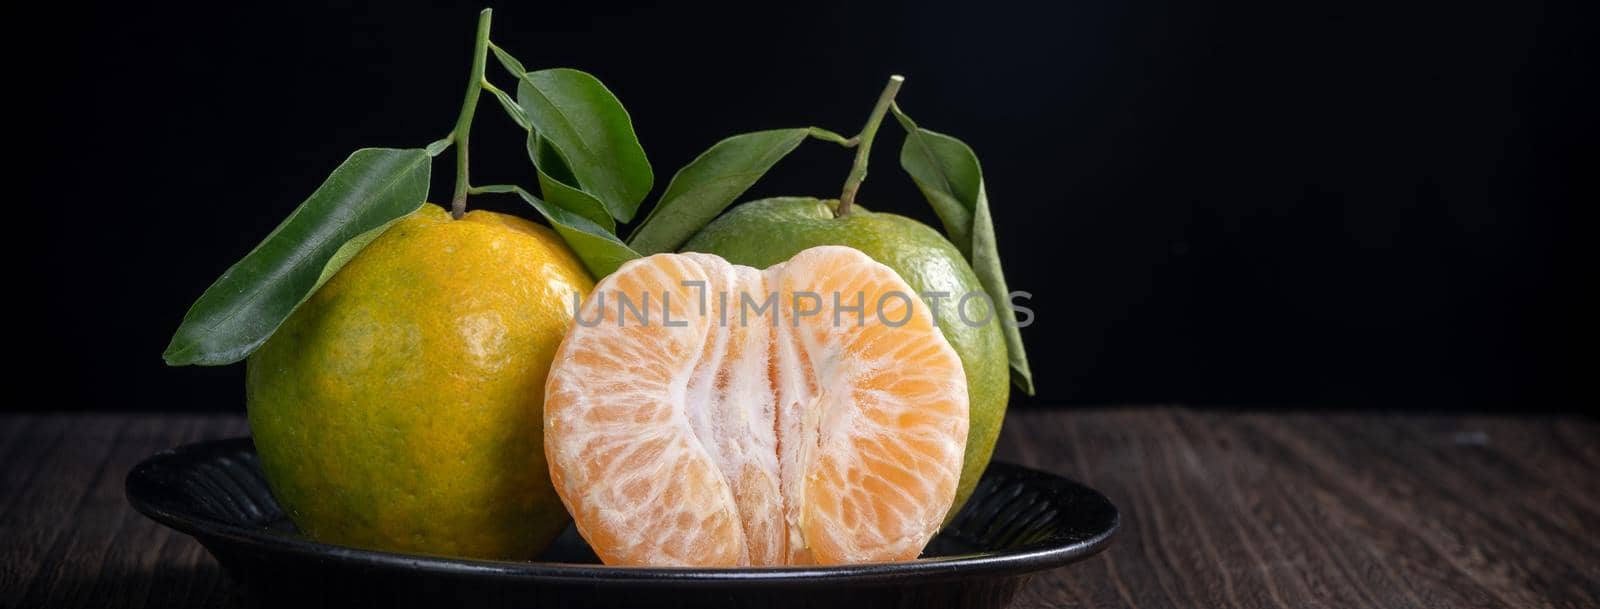 Fresh green tangerine mandarin orange on dark wooden table background. by ROMIXIMAGE